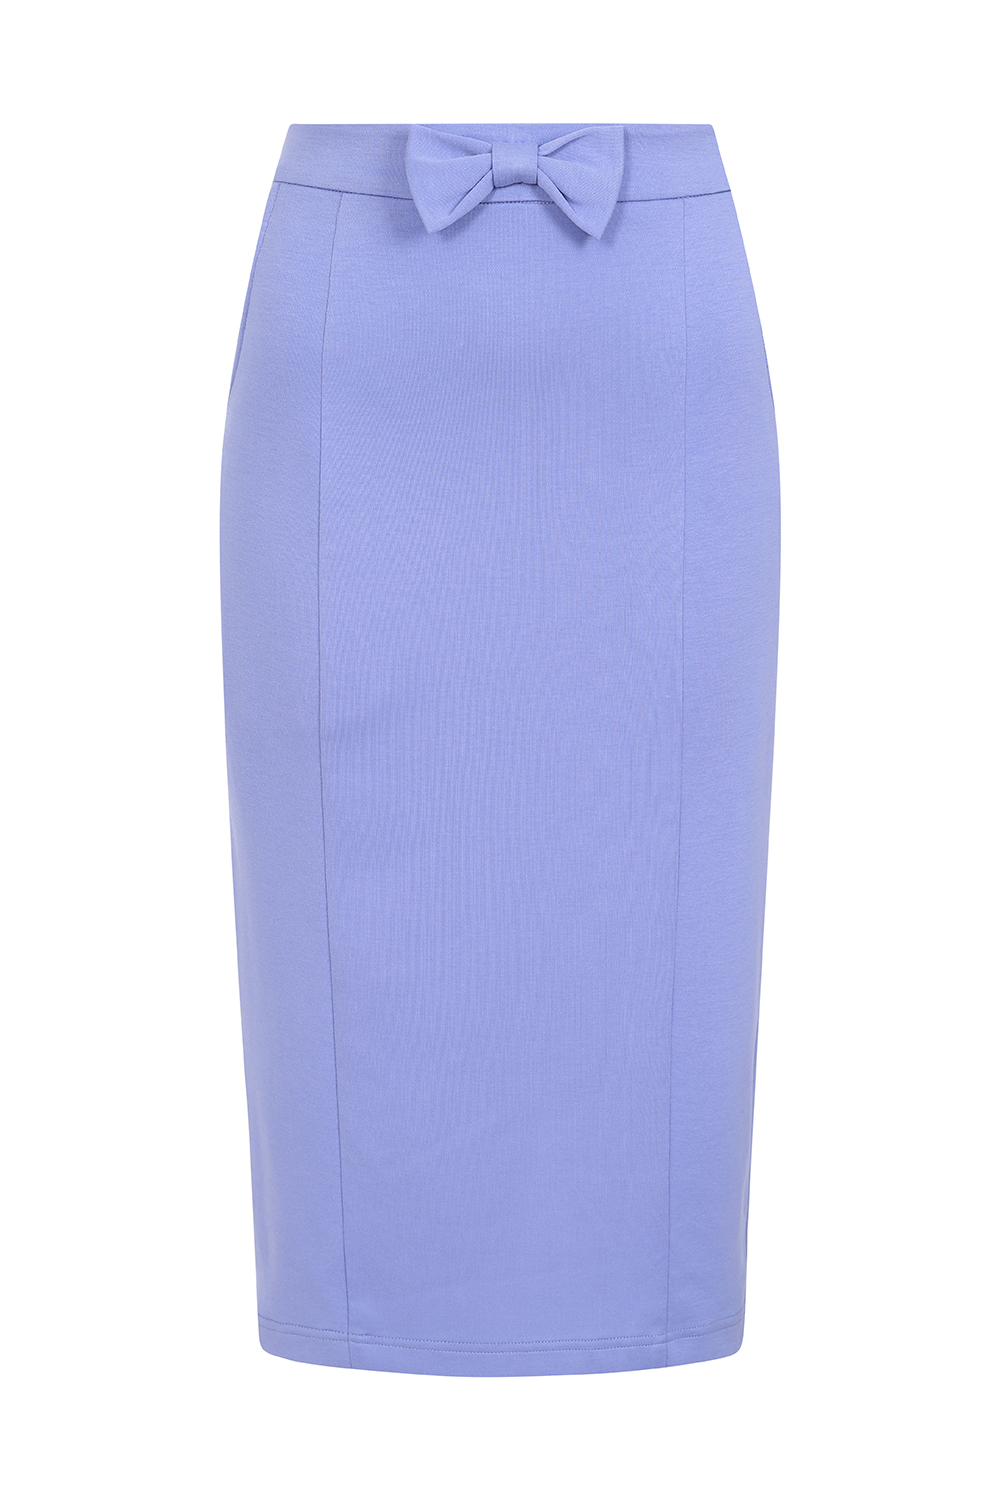 Alexa Light Purple Wiggle Skirt